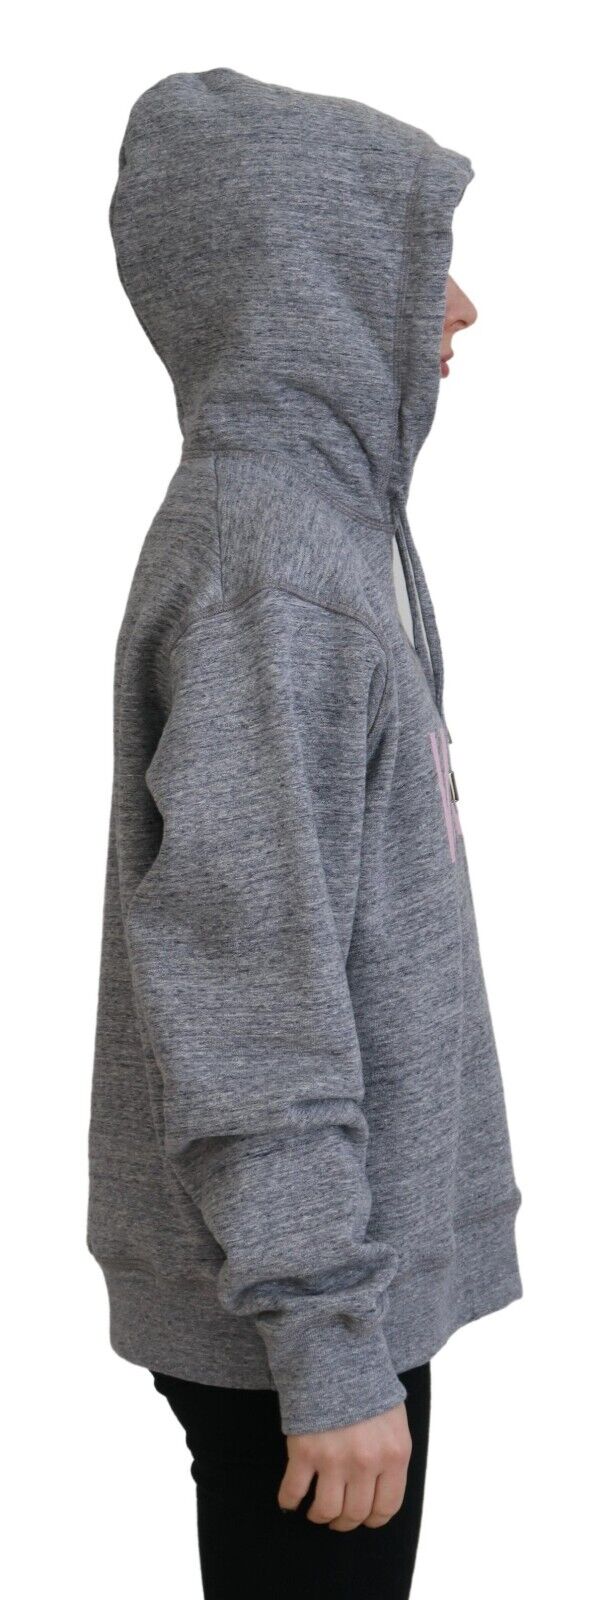 Gray Logo Printed Hooded Women Long Sleeve Sweater